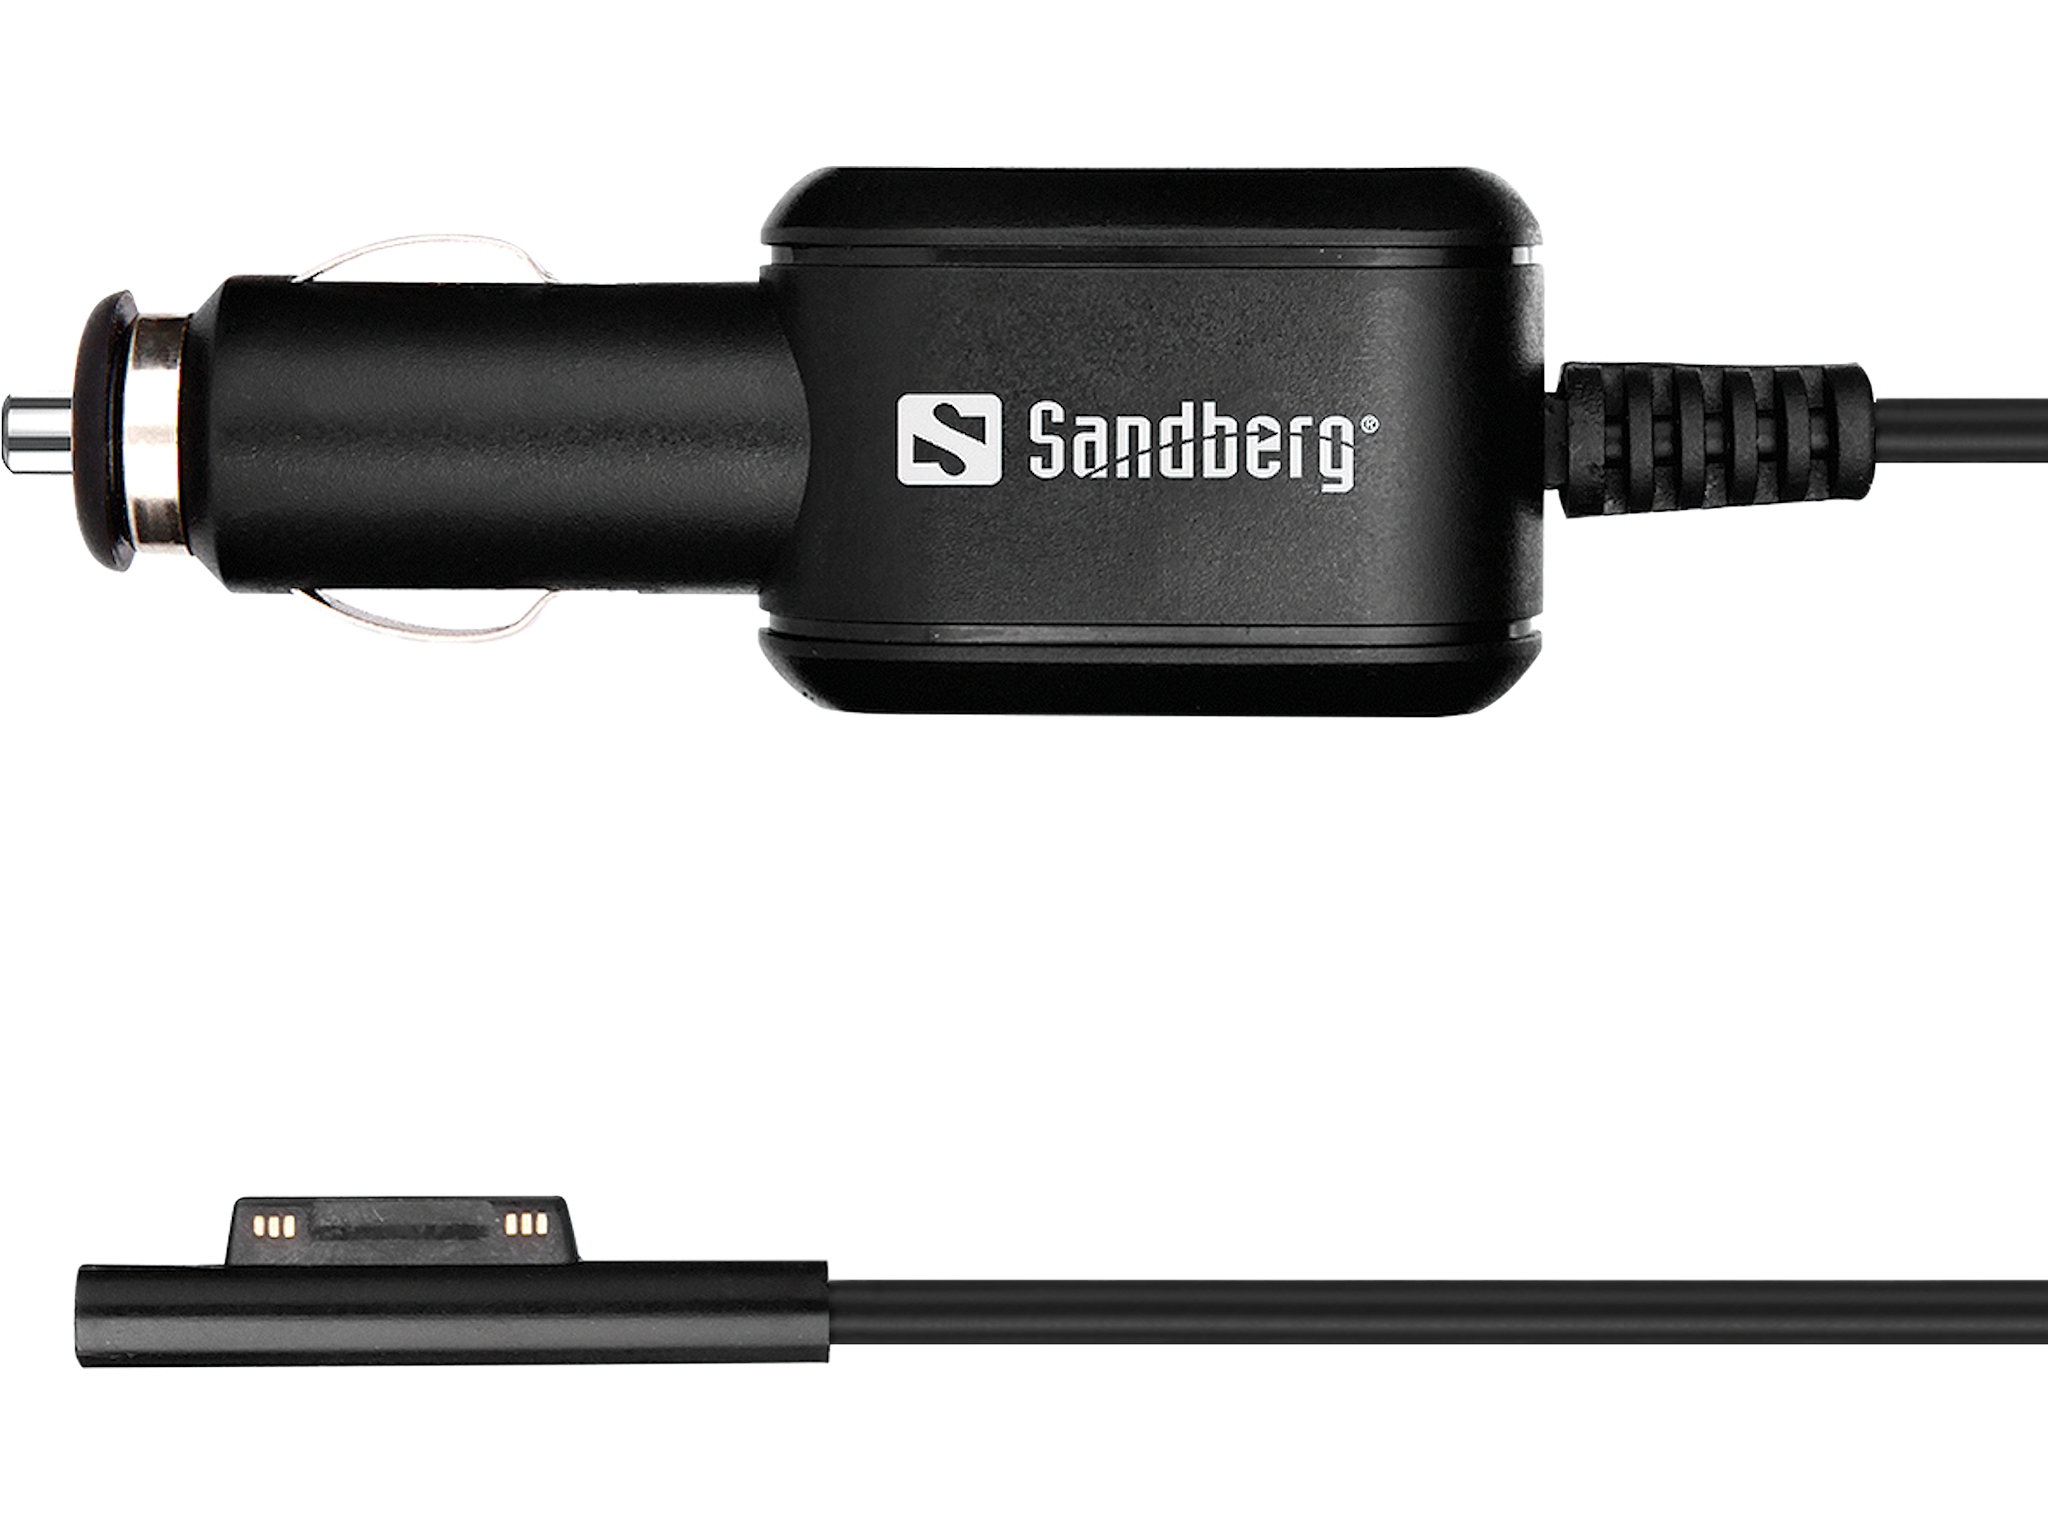 Sandberg 441-00 Car Charger Surface Pro 3-7